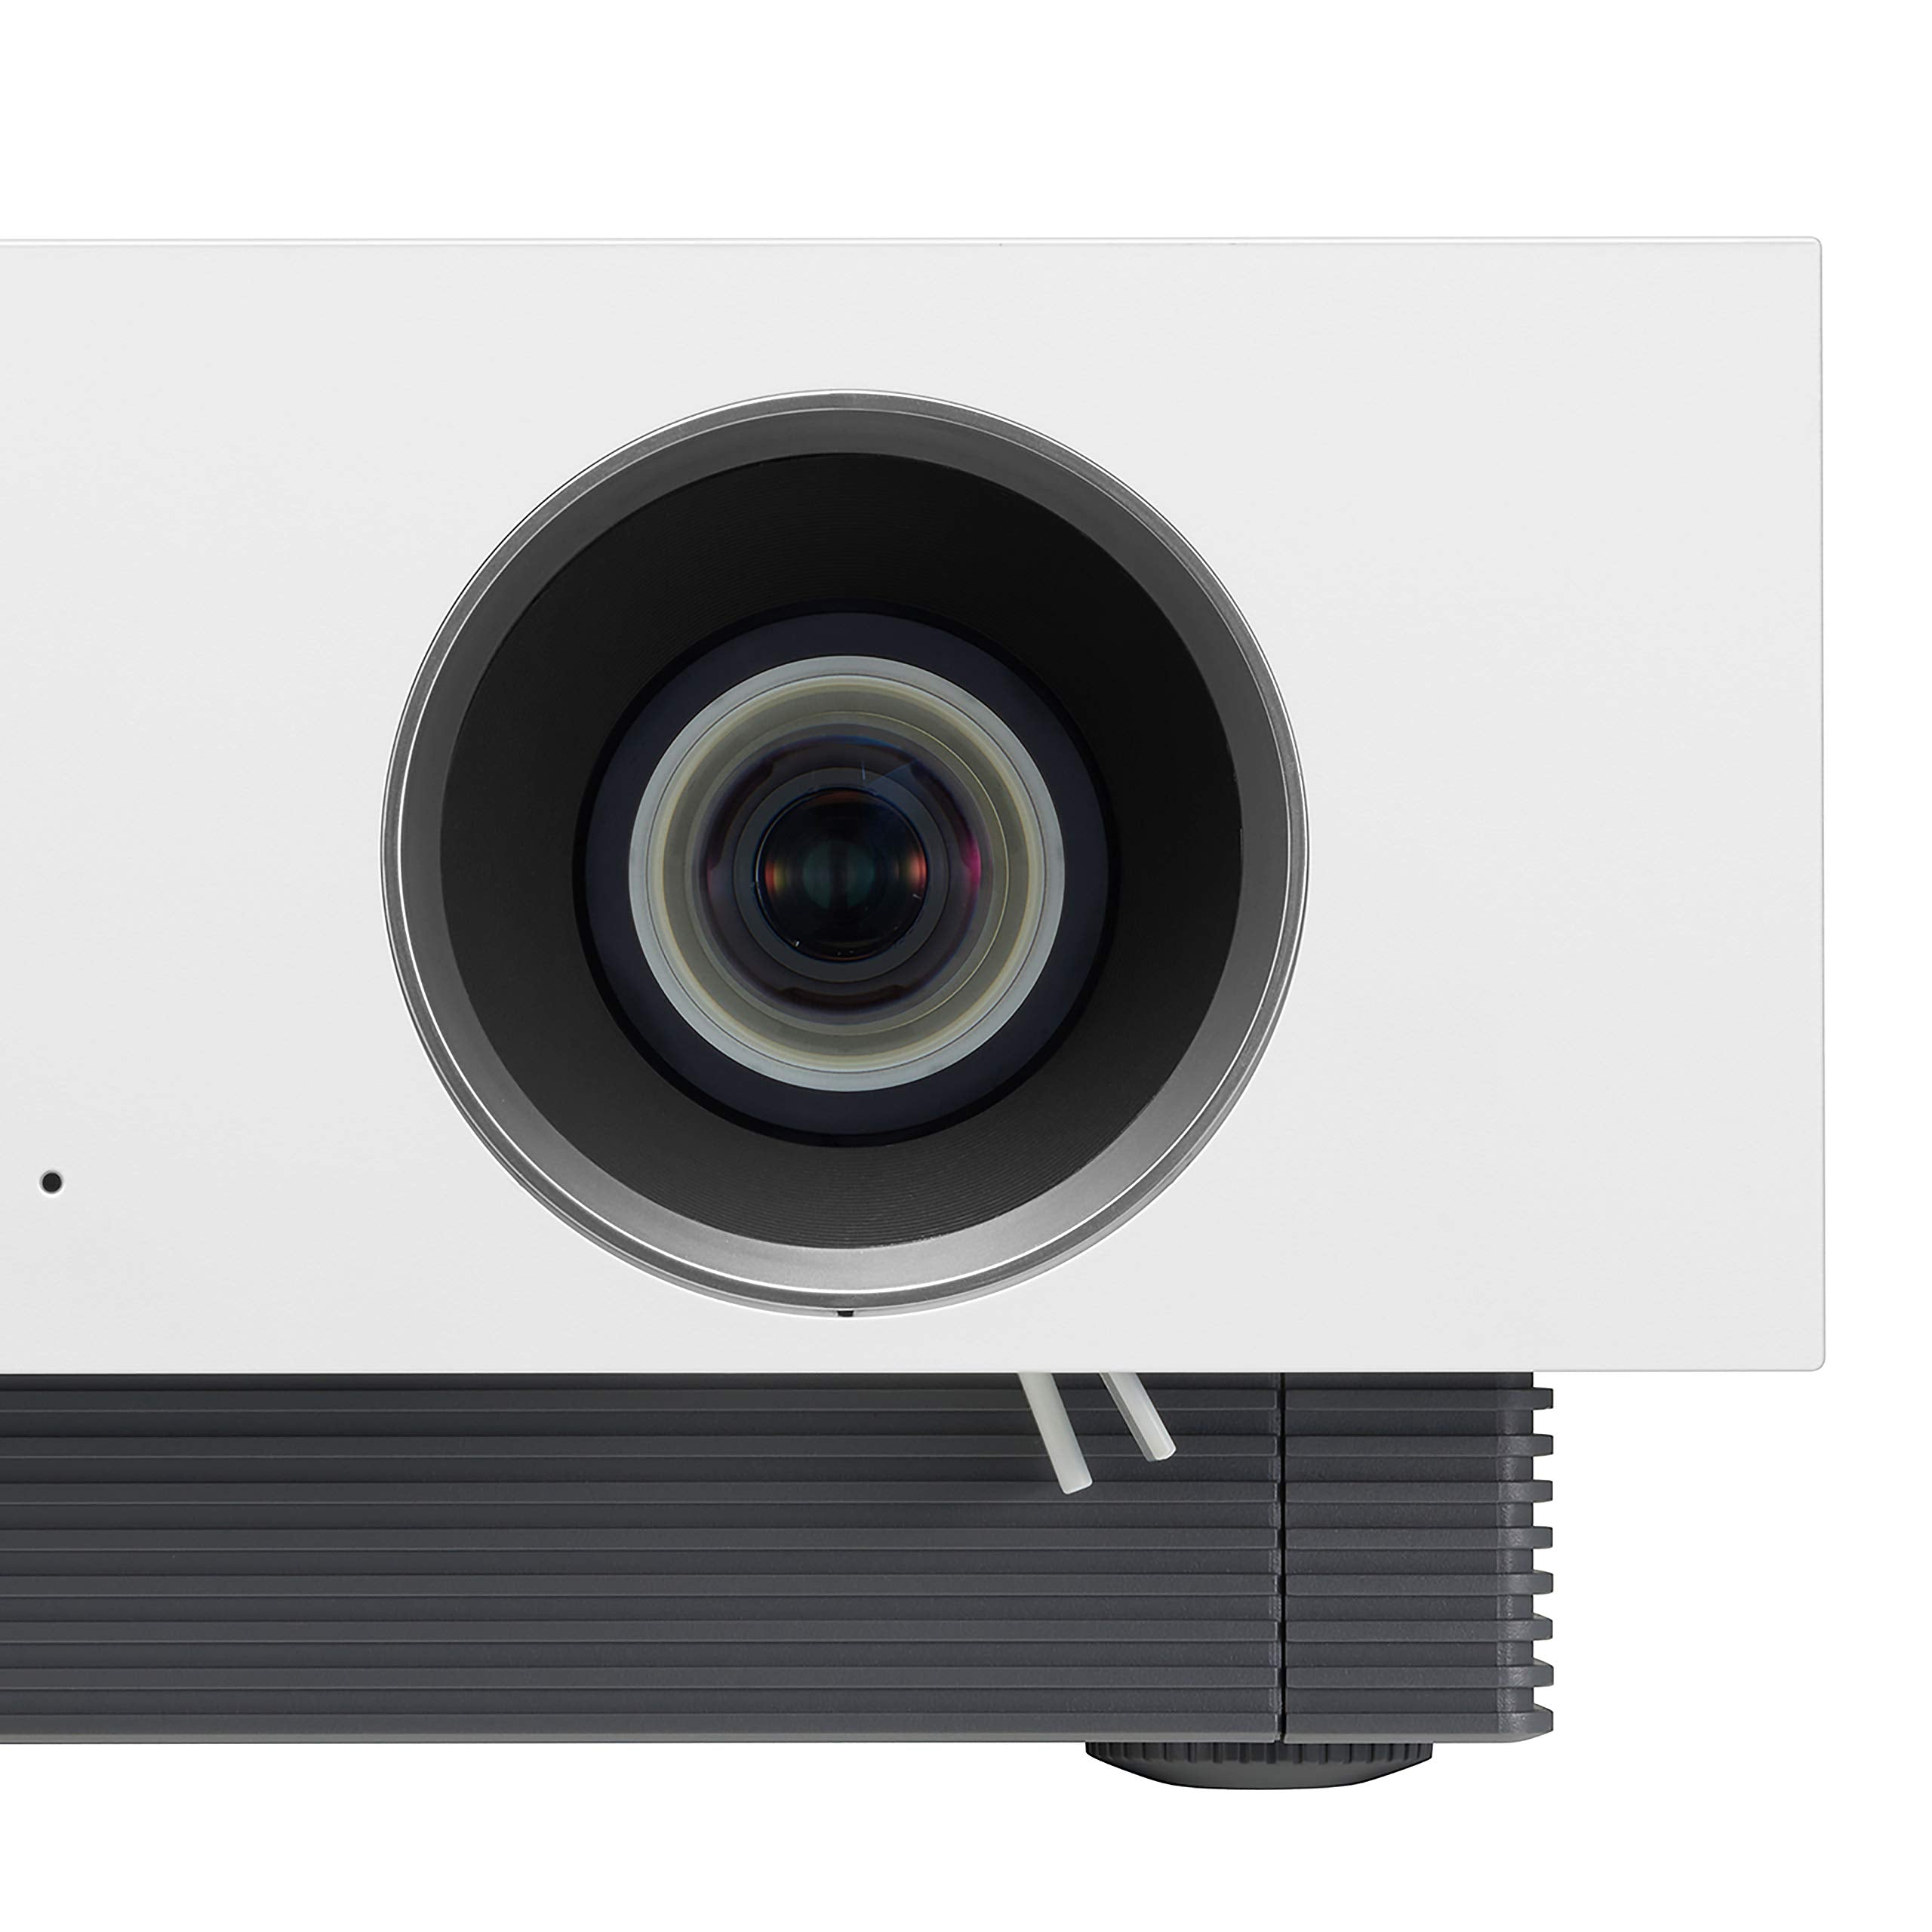 LG HU810PW 4K UHD (3840 x 2160) Smart Dual Laser CineBeam Projector